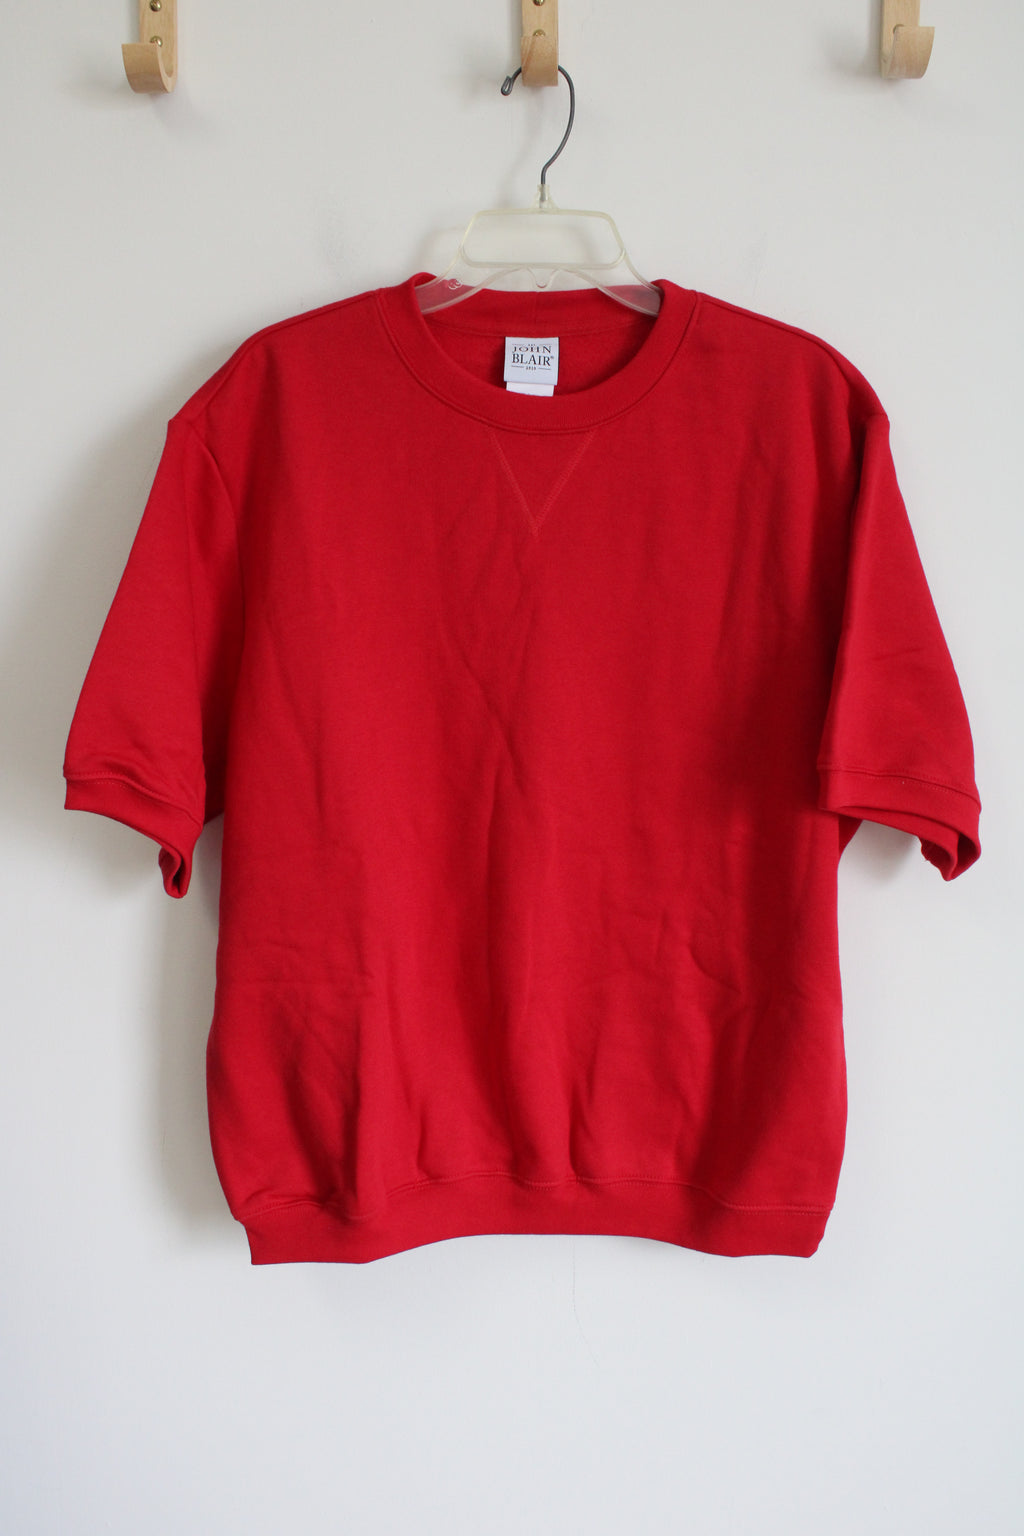 John Blair Red Fleece Lined Short Sleeved Sweatshirt | L